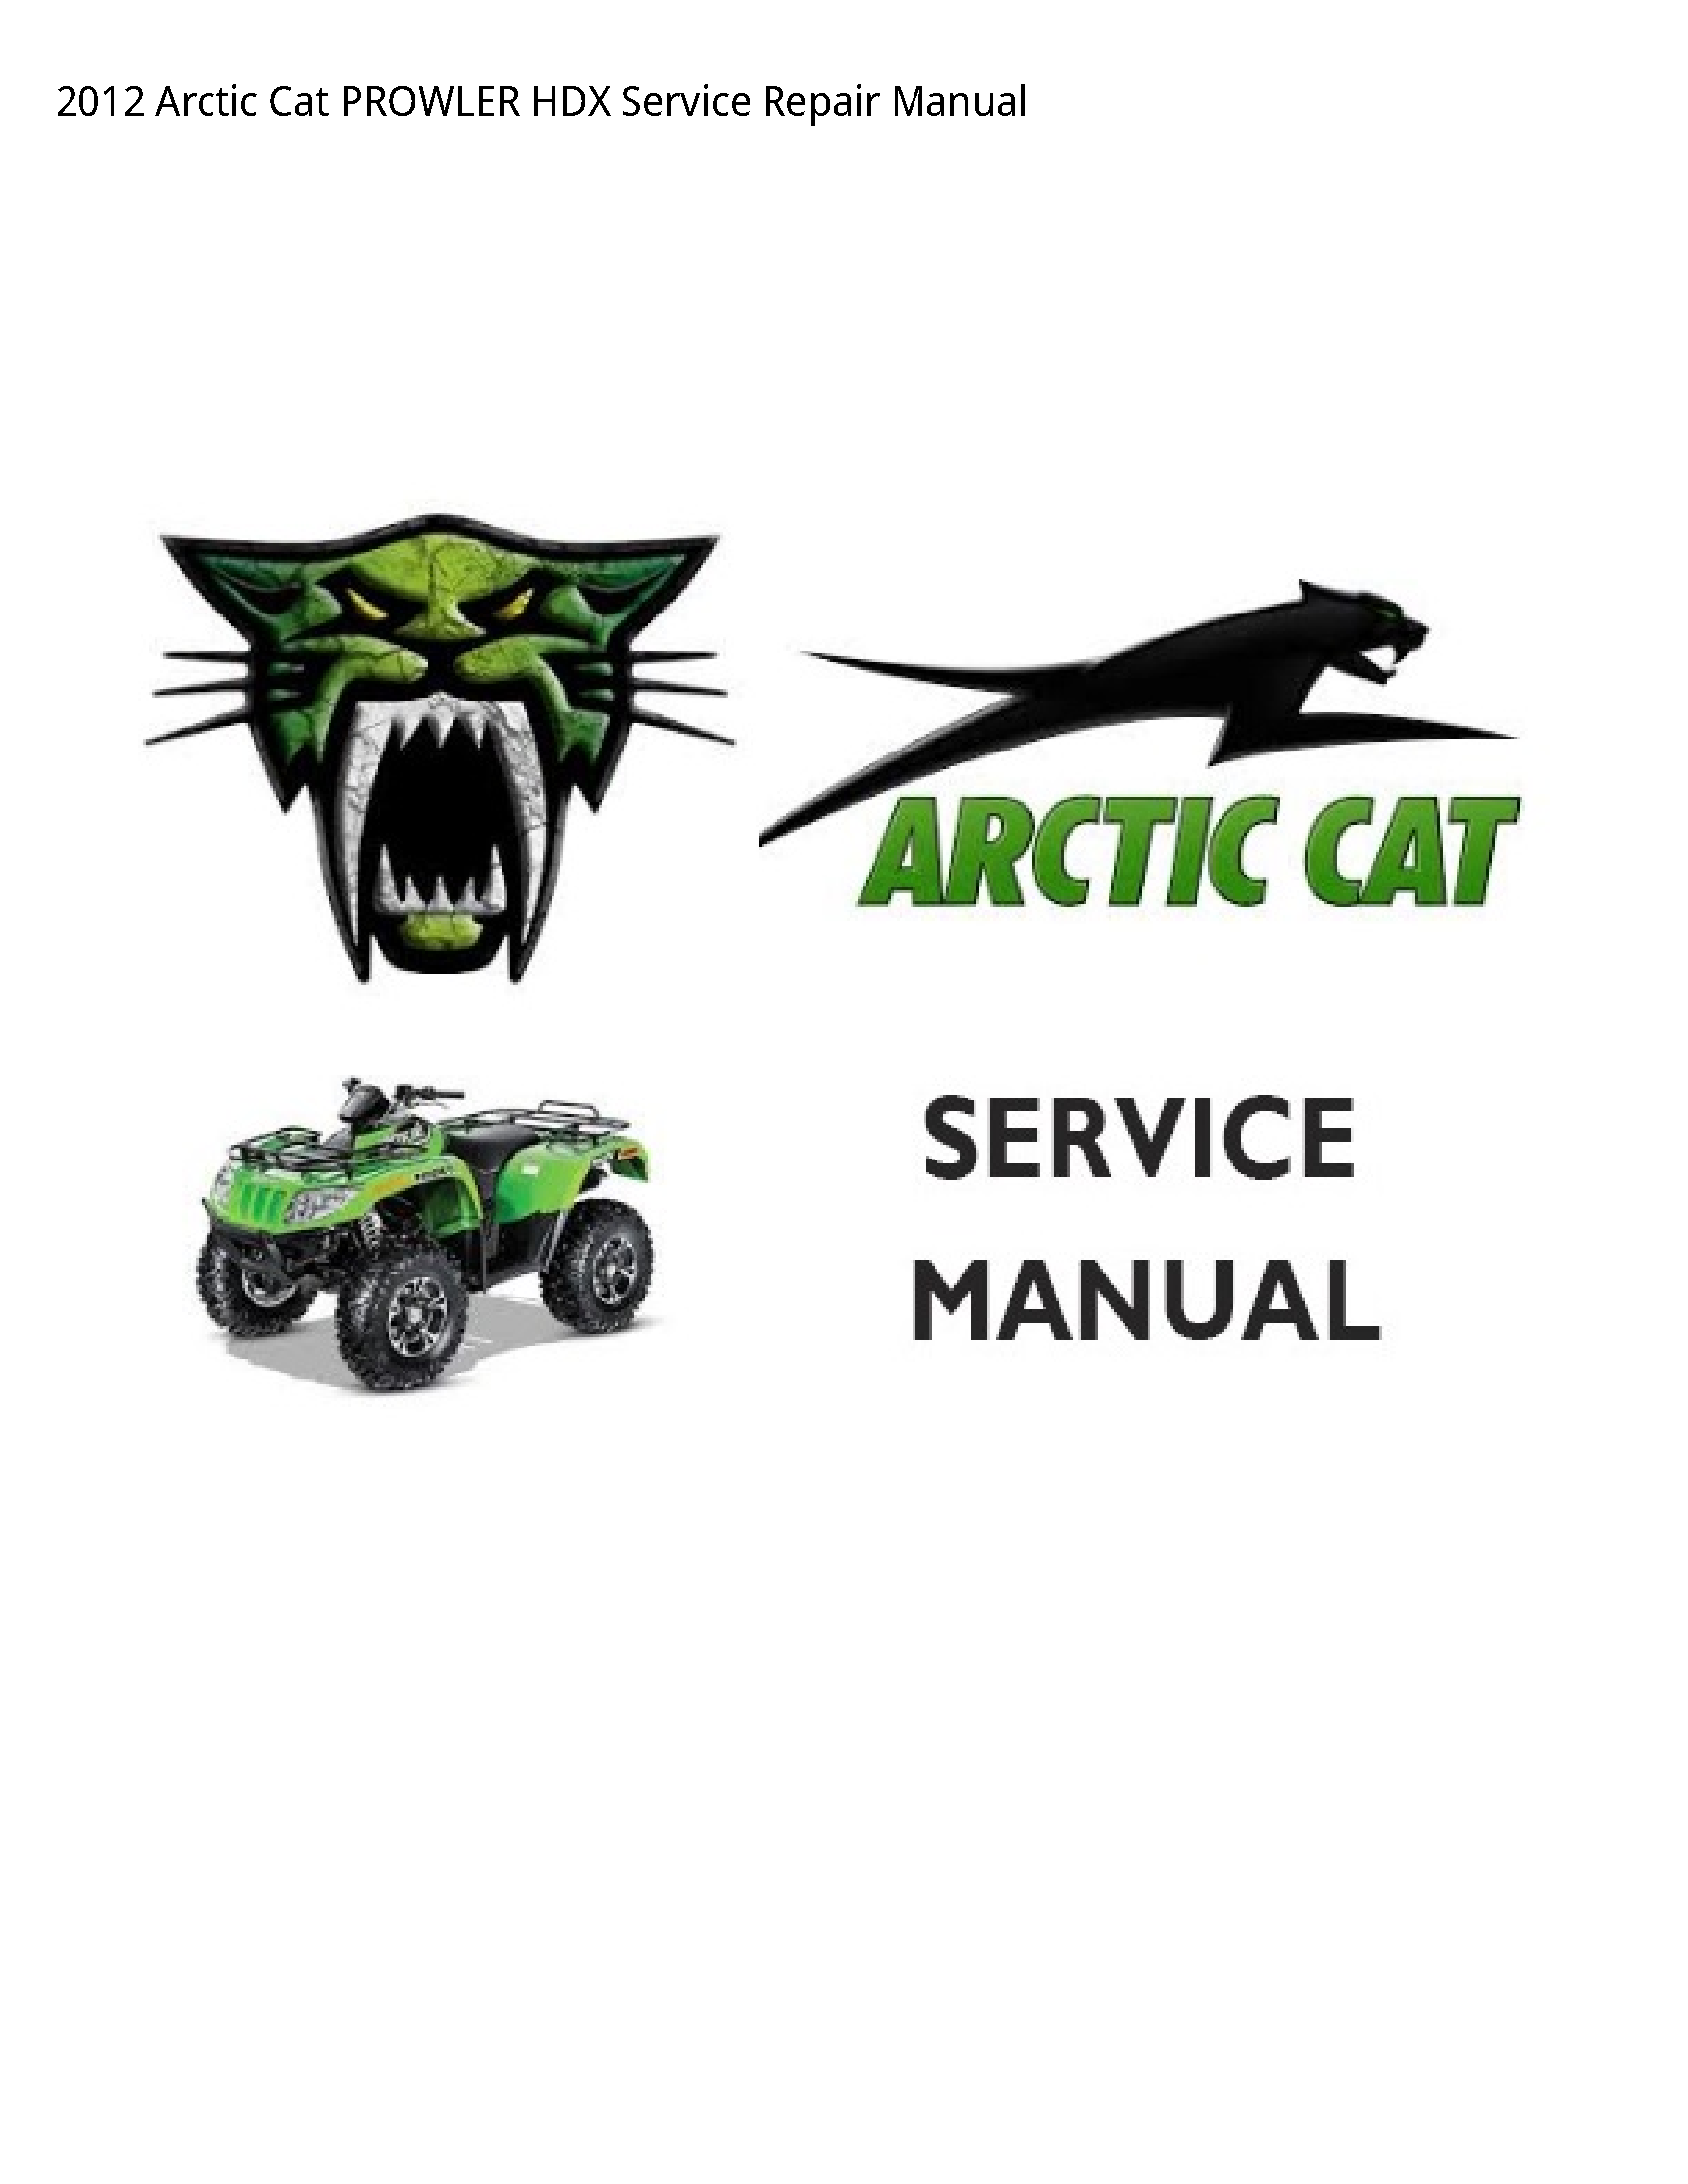 Arctic Cat PROWLER HDX manual